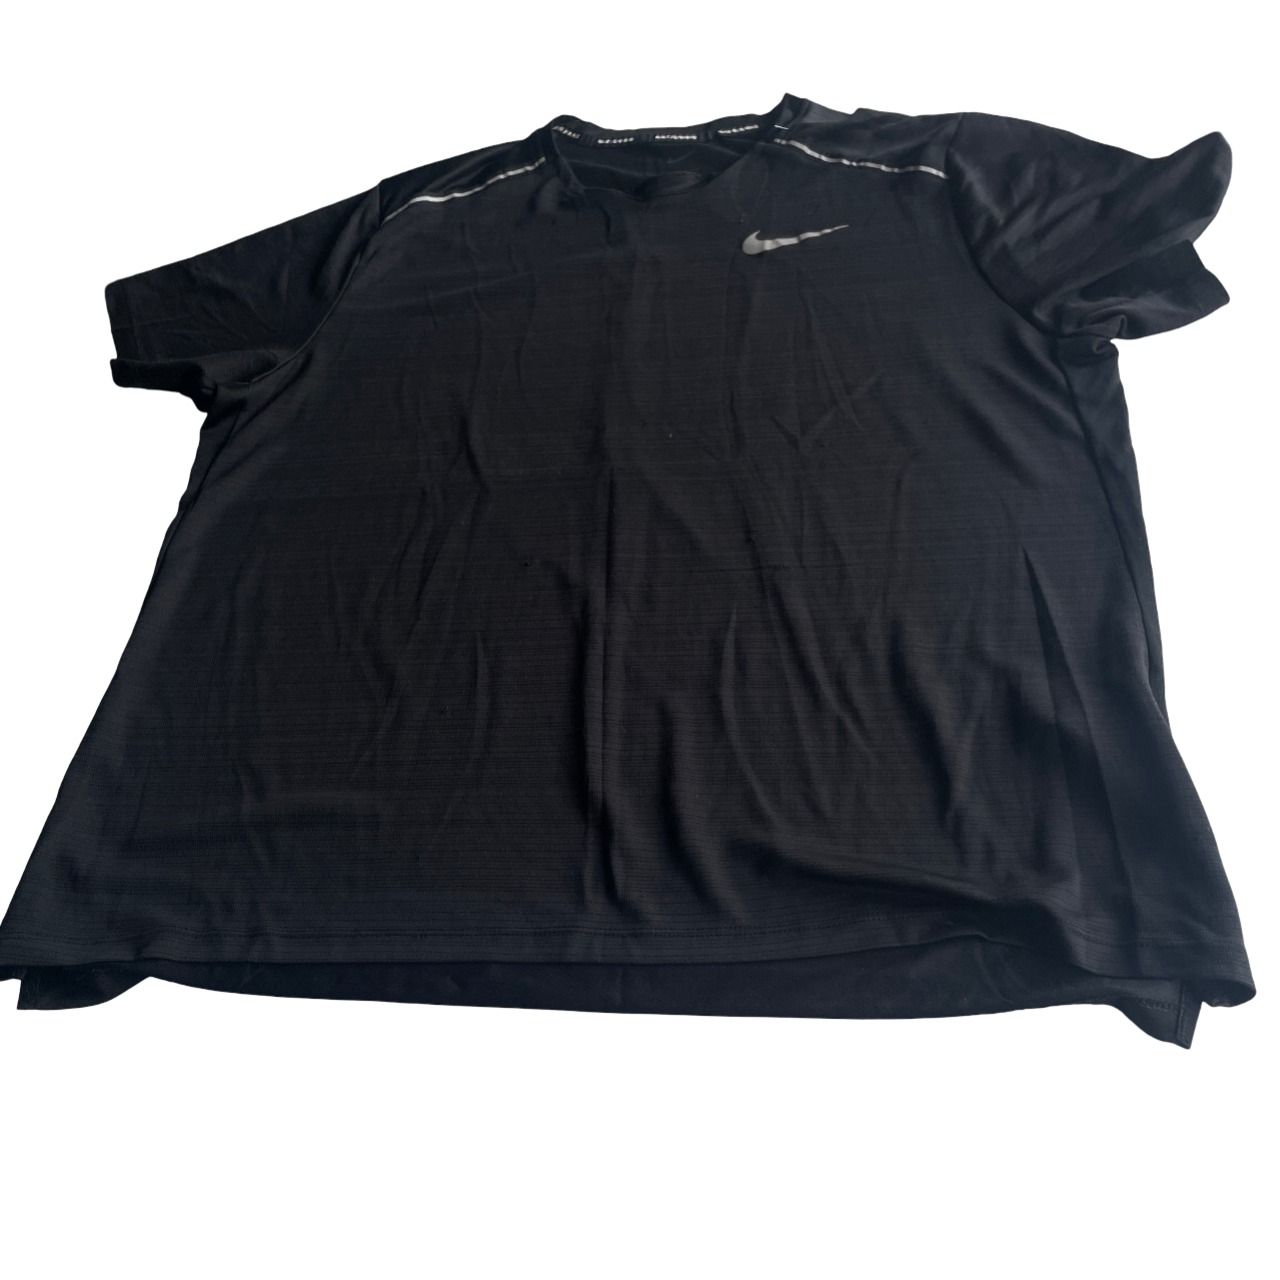 Nike Dri-FIT Miler Men's Short-Sleeve Running Top IN Black M/L L28 W 23 SKU 5215